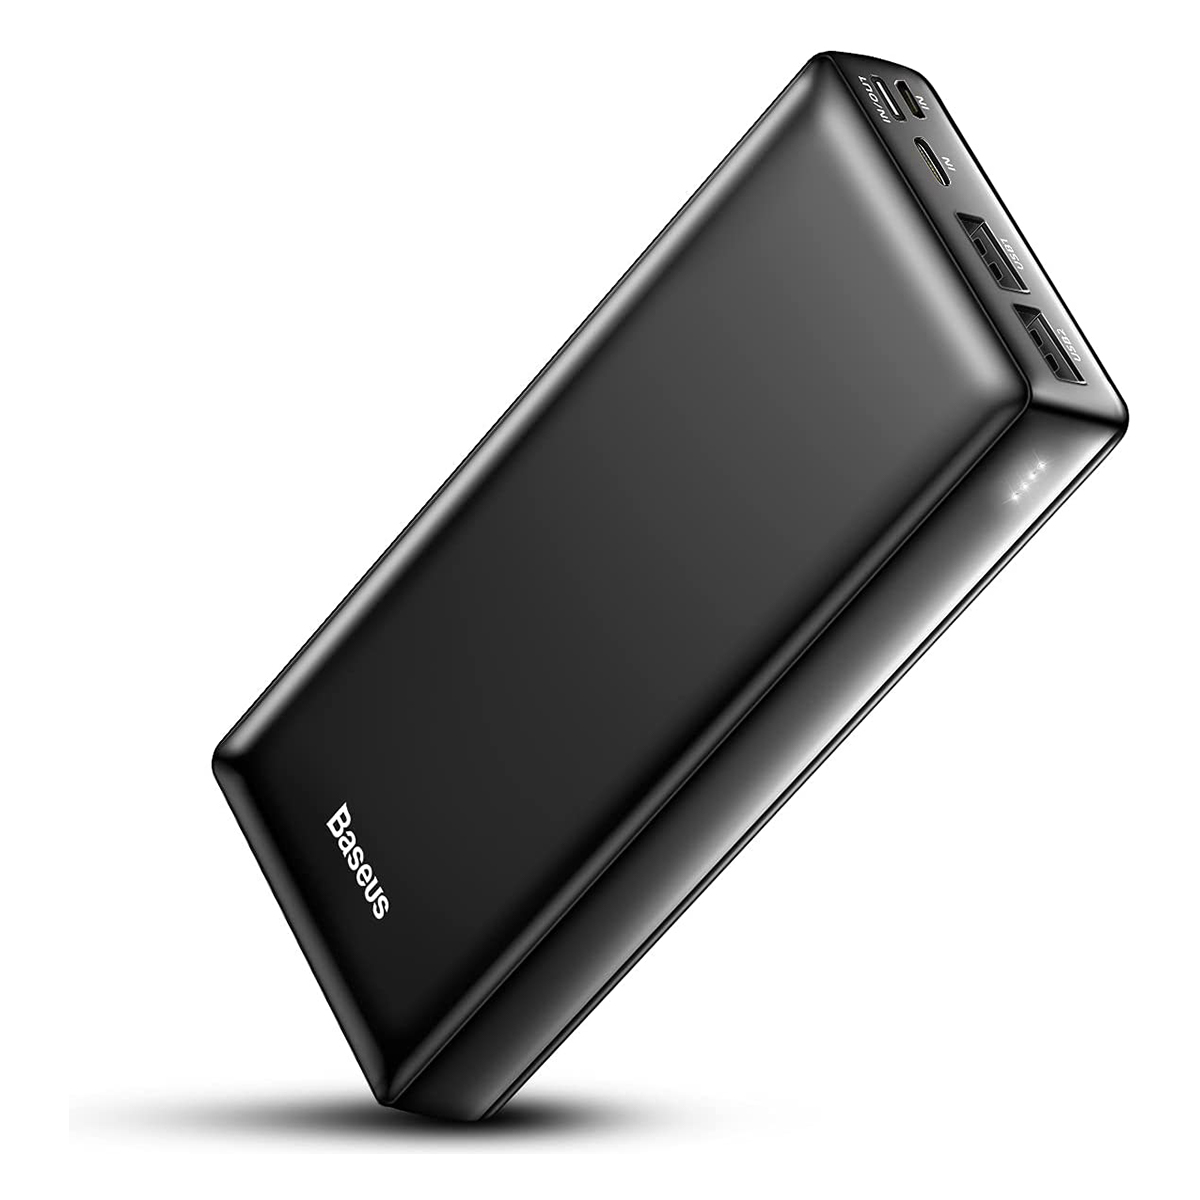 USB C Portable Charger 30000 mAh Fast Charging Battery Powerbank